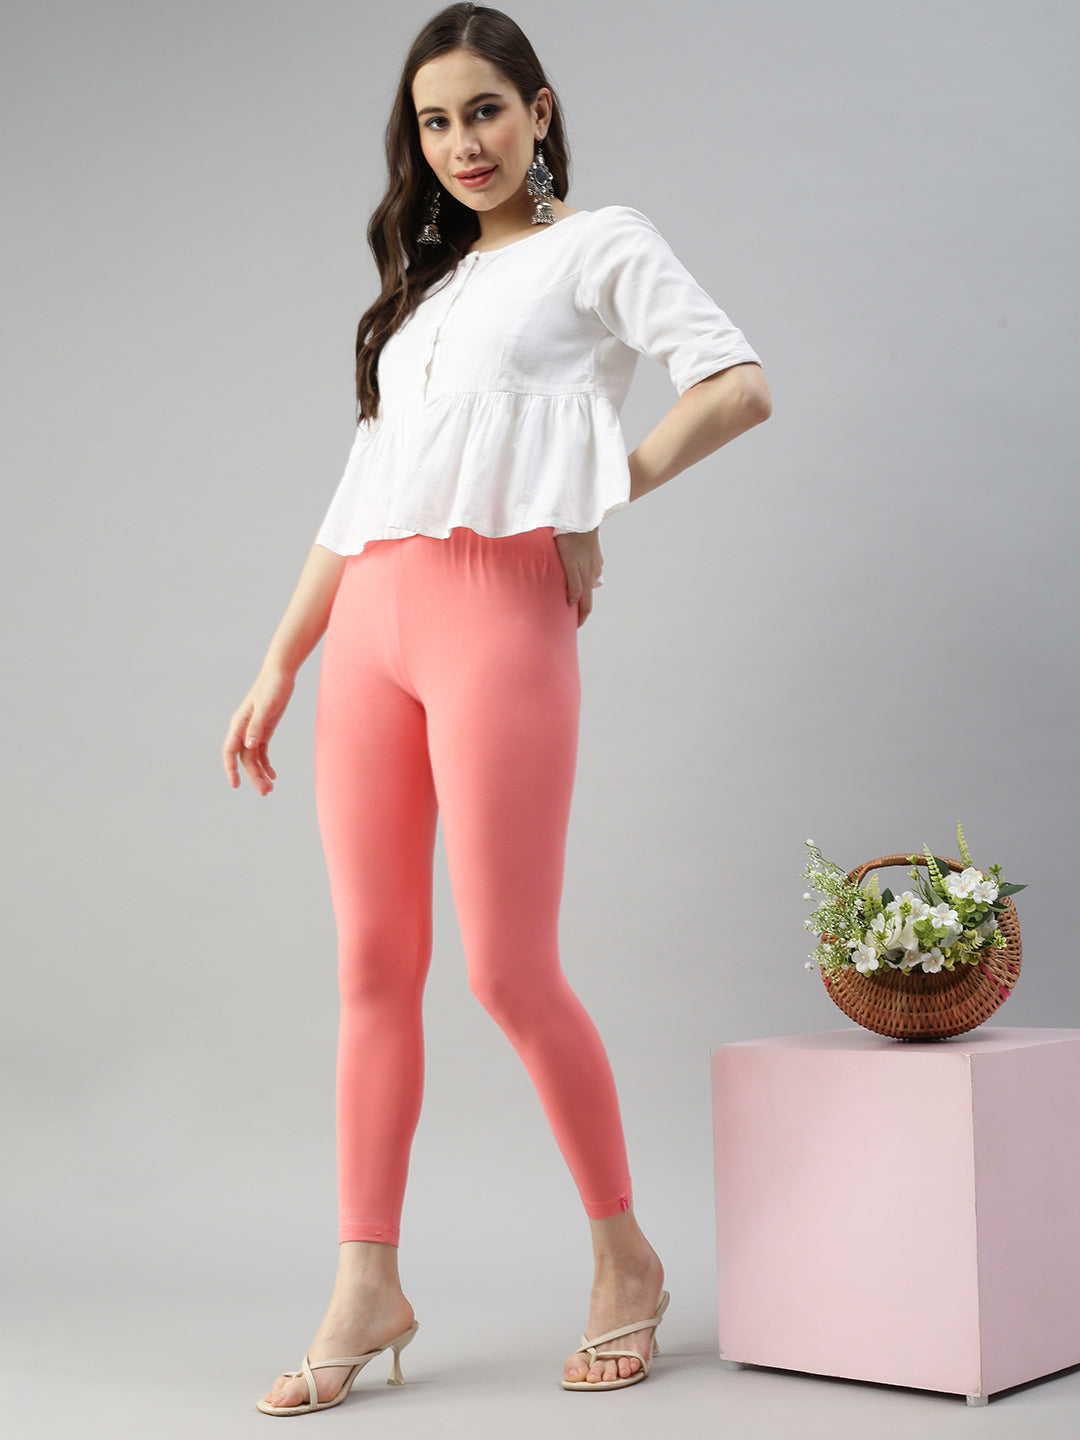 Shop the Best Treggings Pants for Women - Trendy & Stylish Look | Prisma  Garments